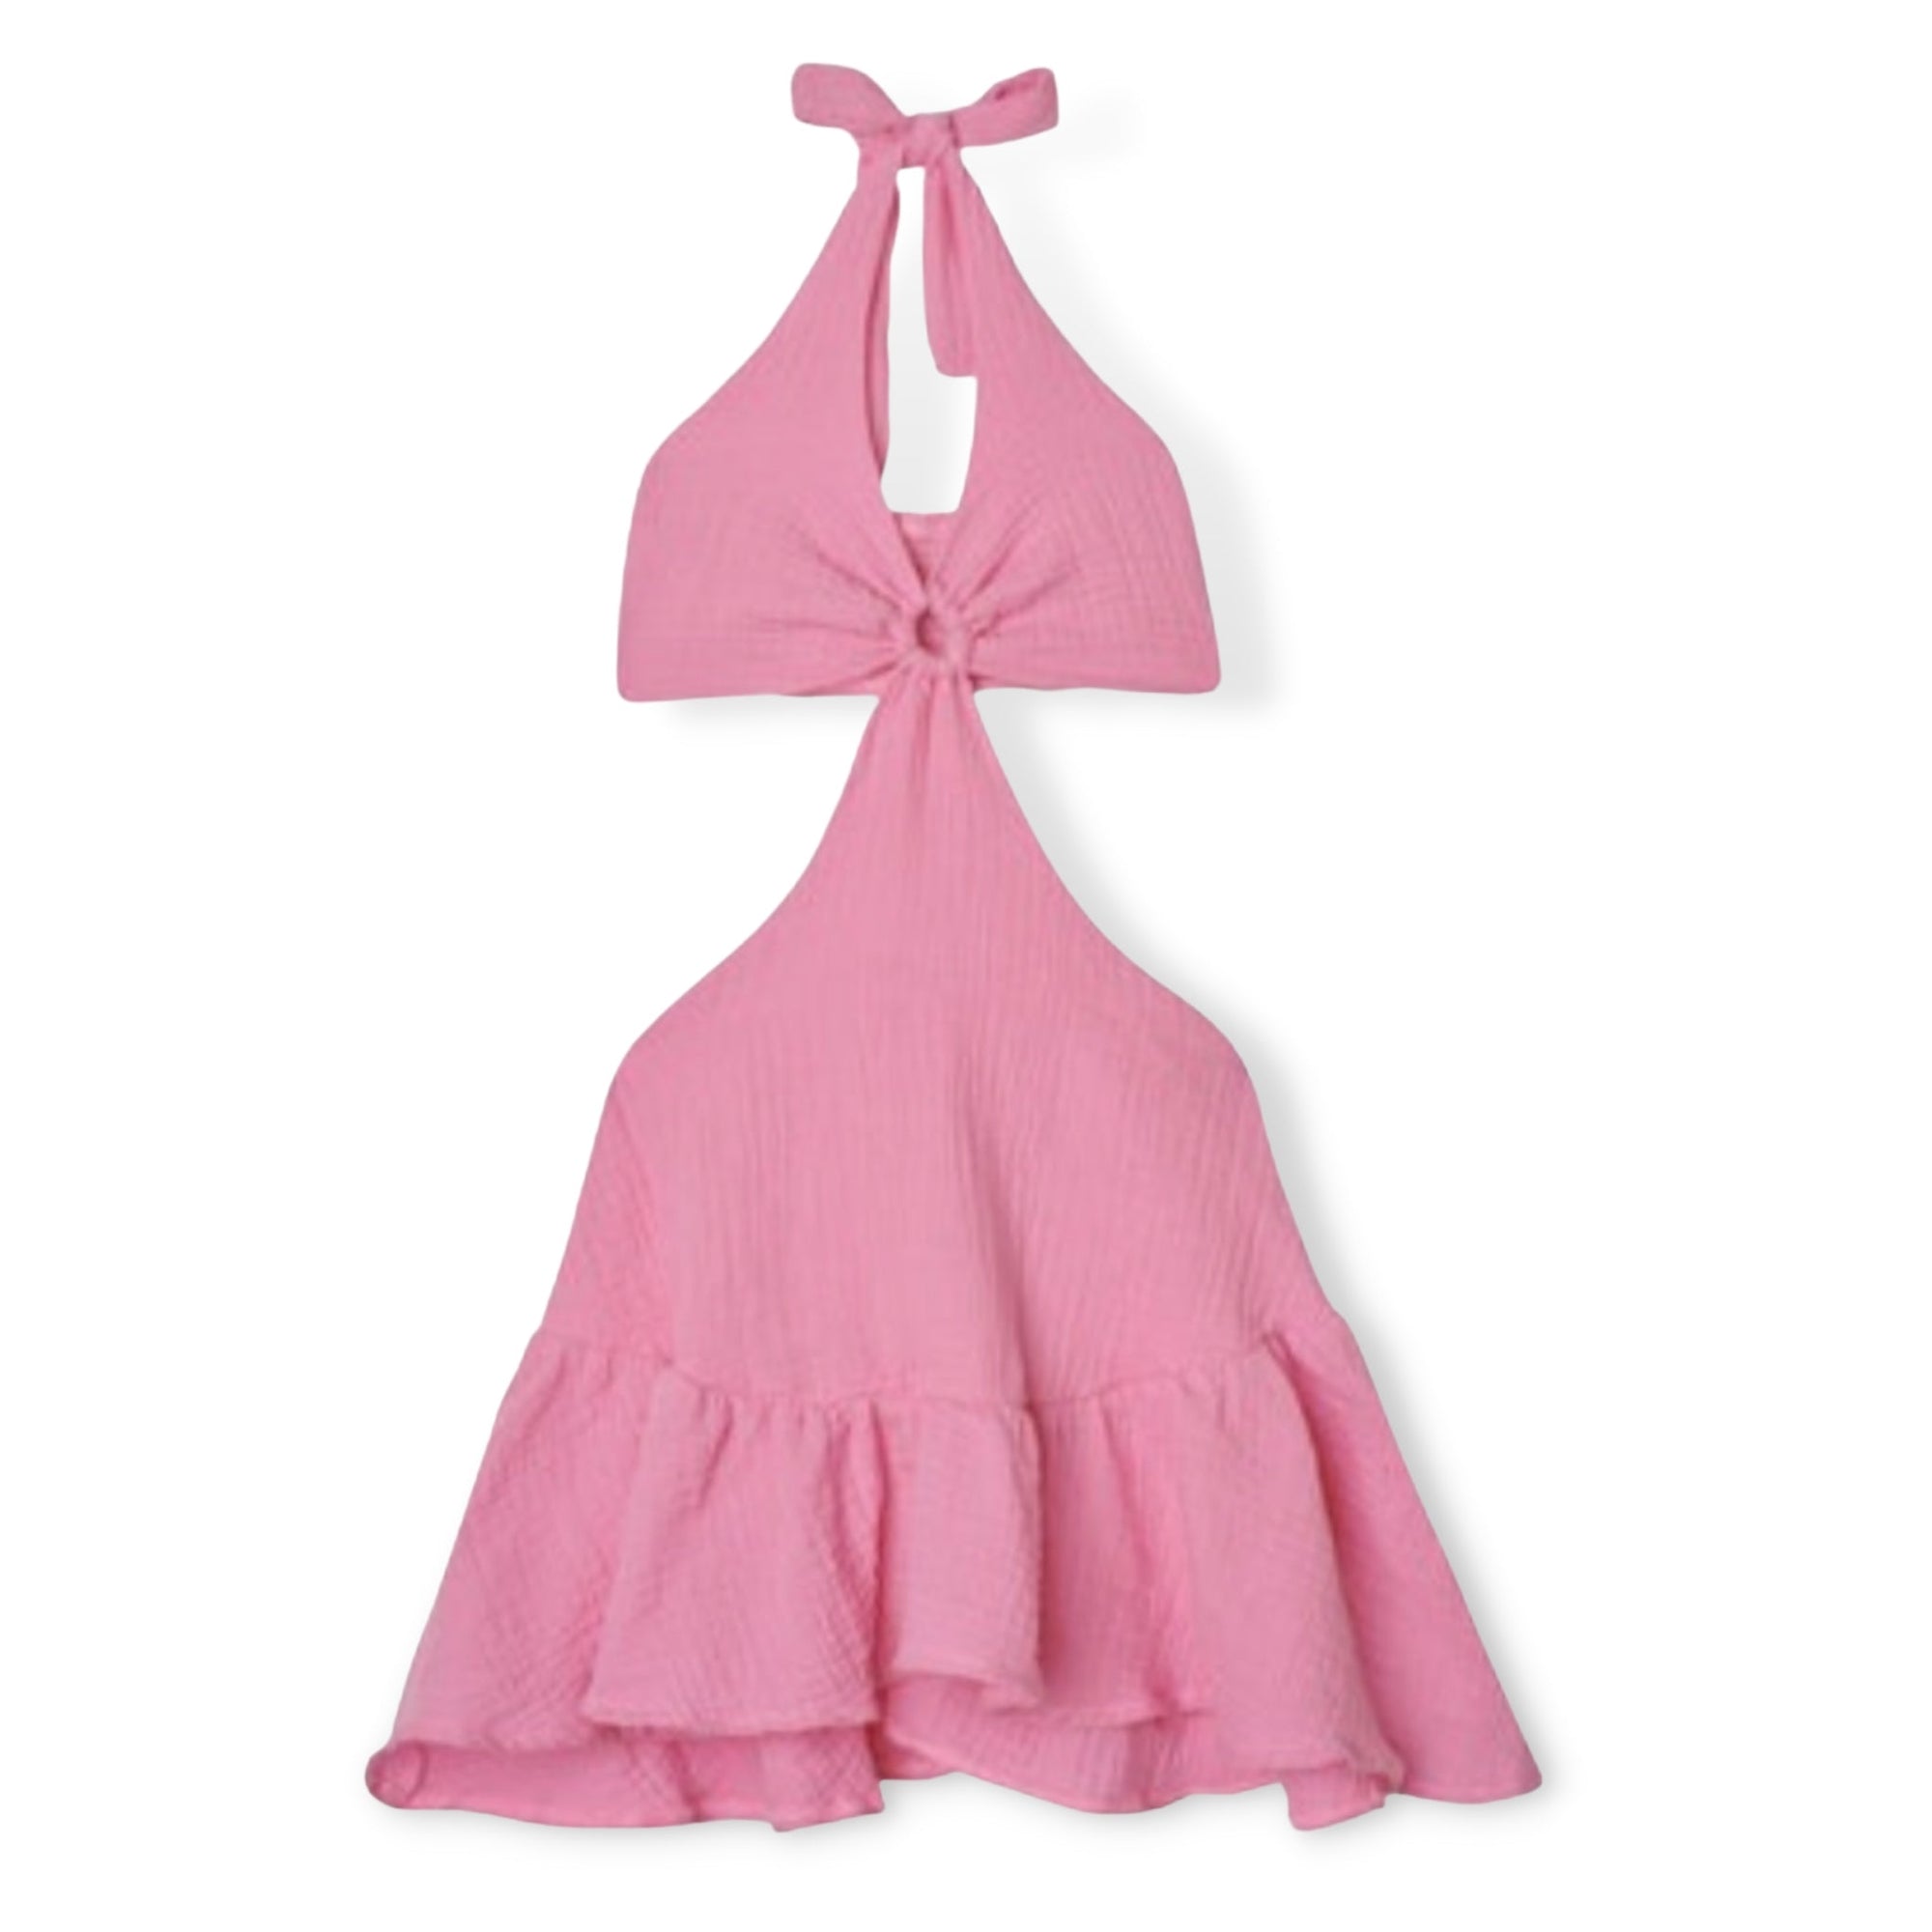 Little Peixoto Pink Iris Ariel Dress - a Spirit Animal - Dress $90-$120 active Nov 2022 Color-Pink